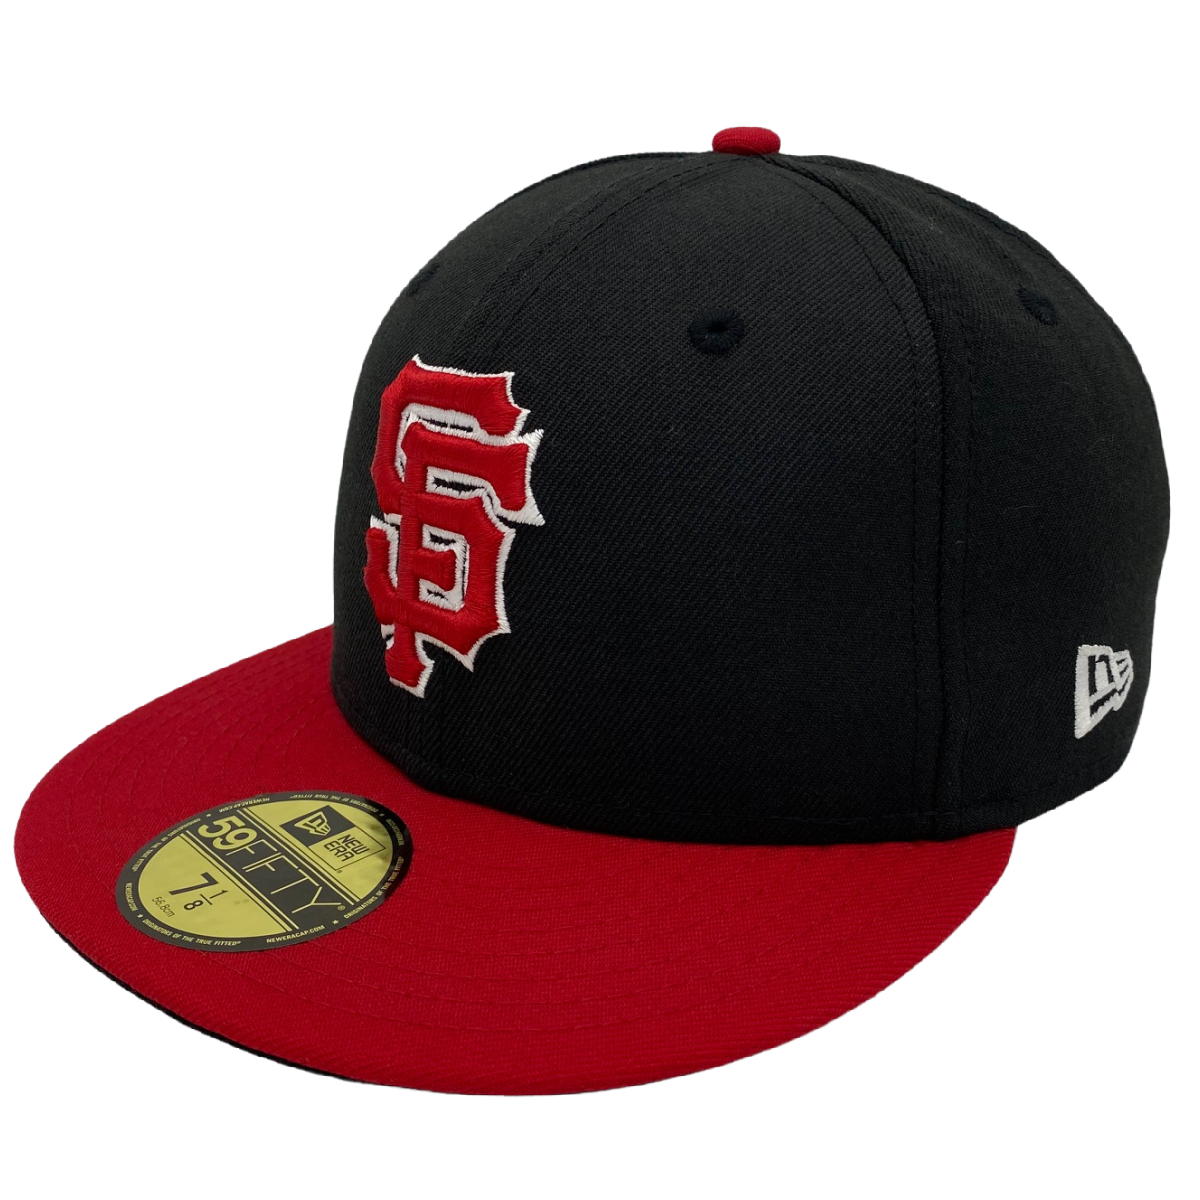 San Francisco Giants NEW ERA 59FIFTY CAP-Black/Red nvsoccer.com The Coliseum